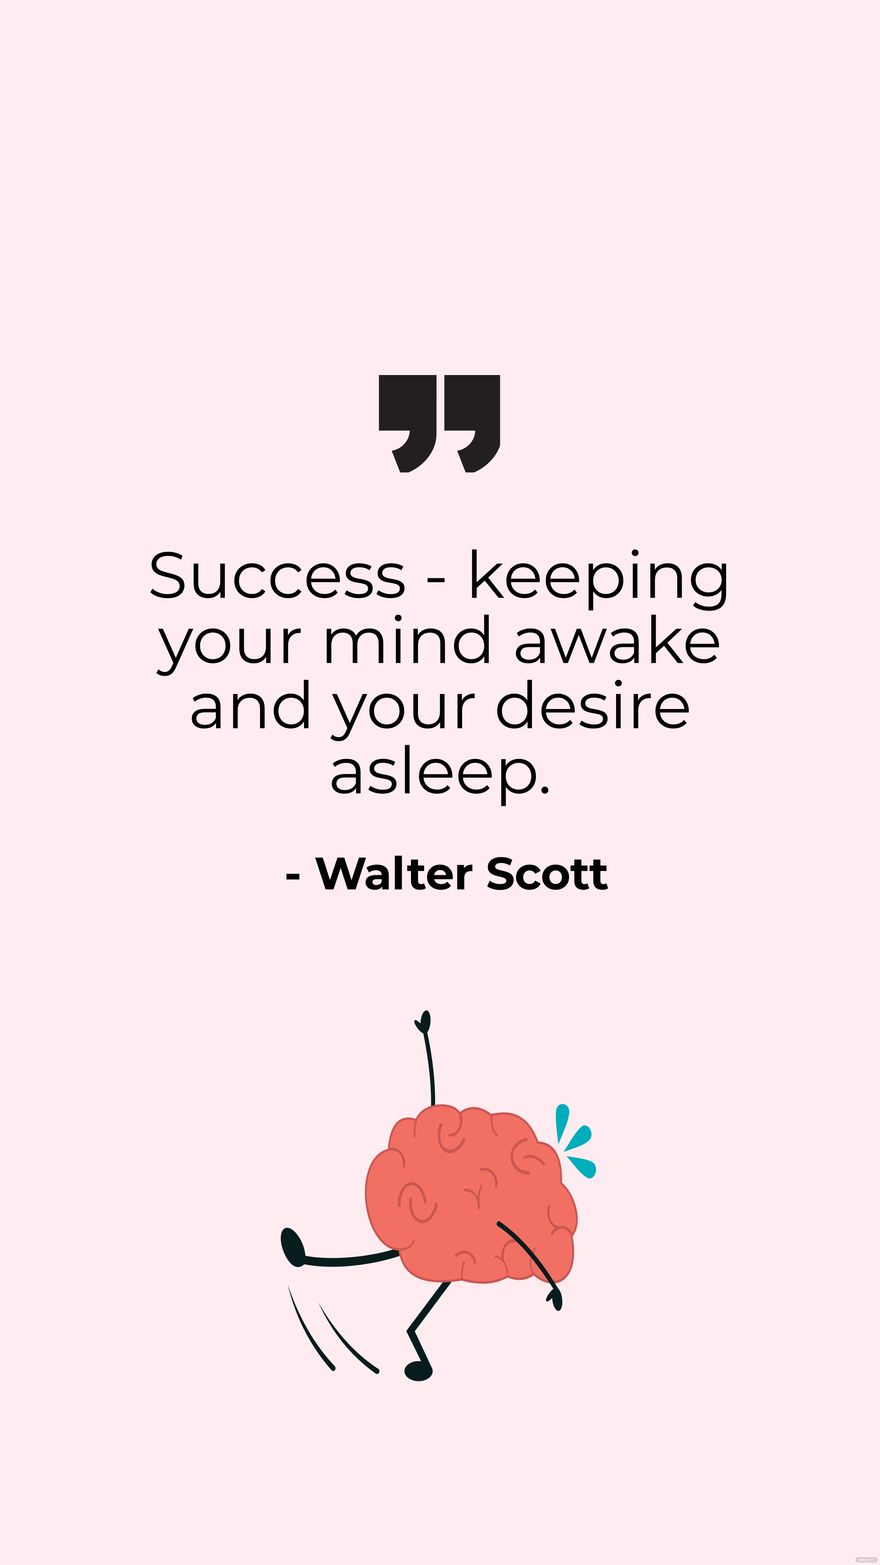 Walter Scott-Success - keeping your mind awake and your desire asleep.